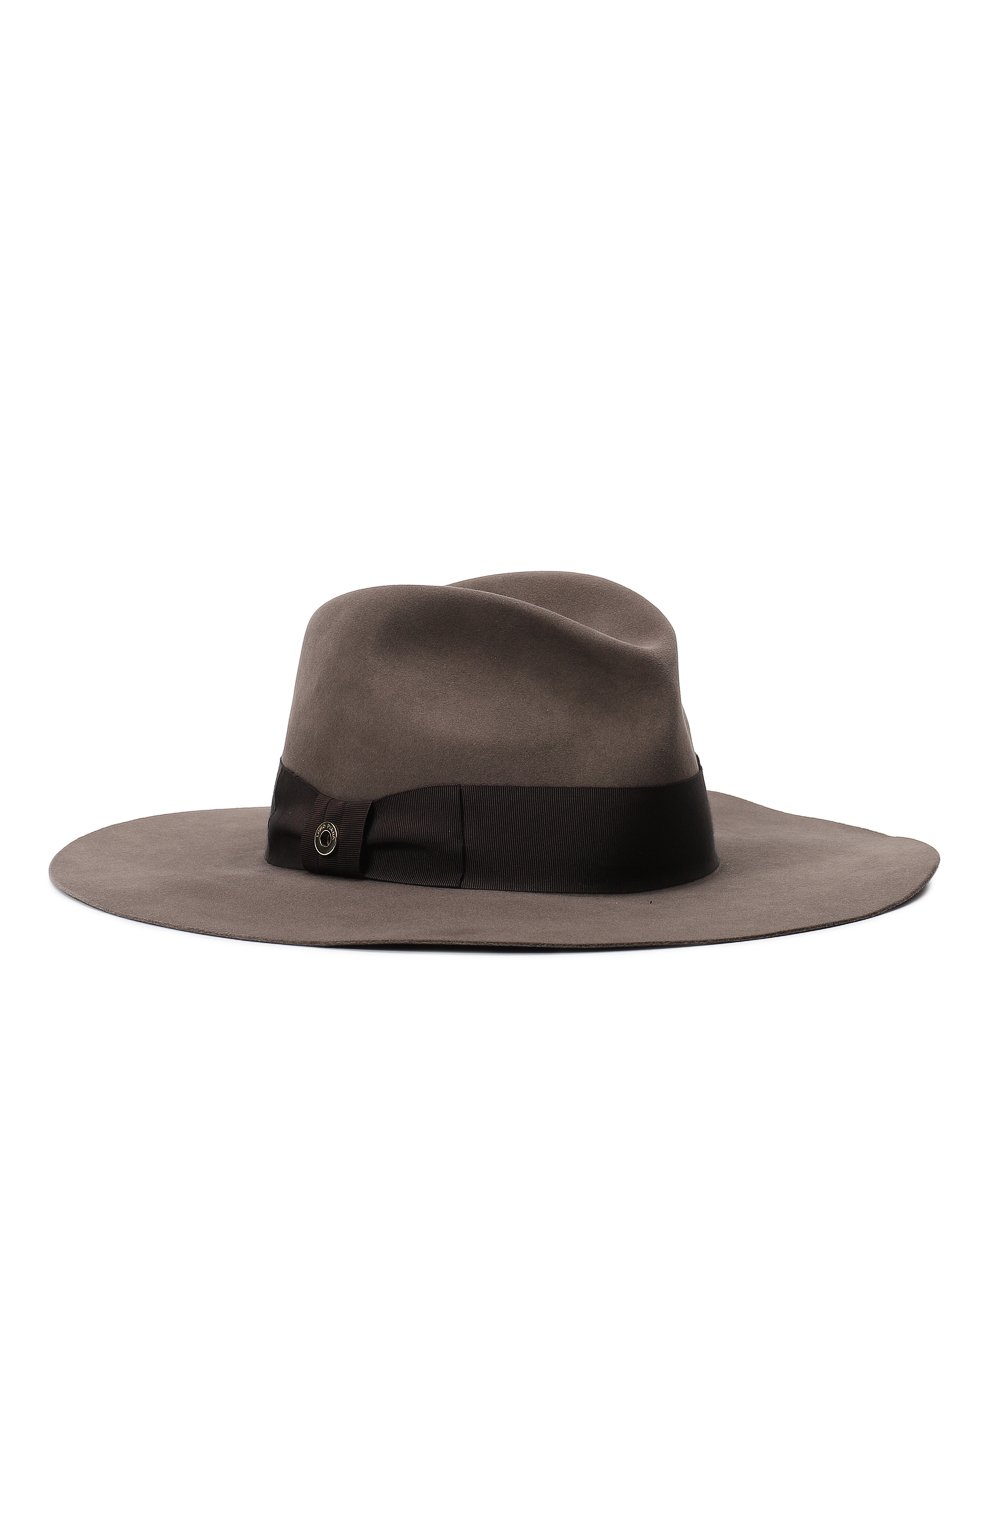 Фетровая шляпа | Loro Piana | Коричневый - 1